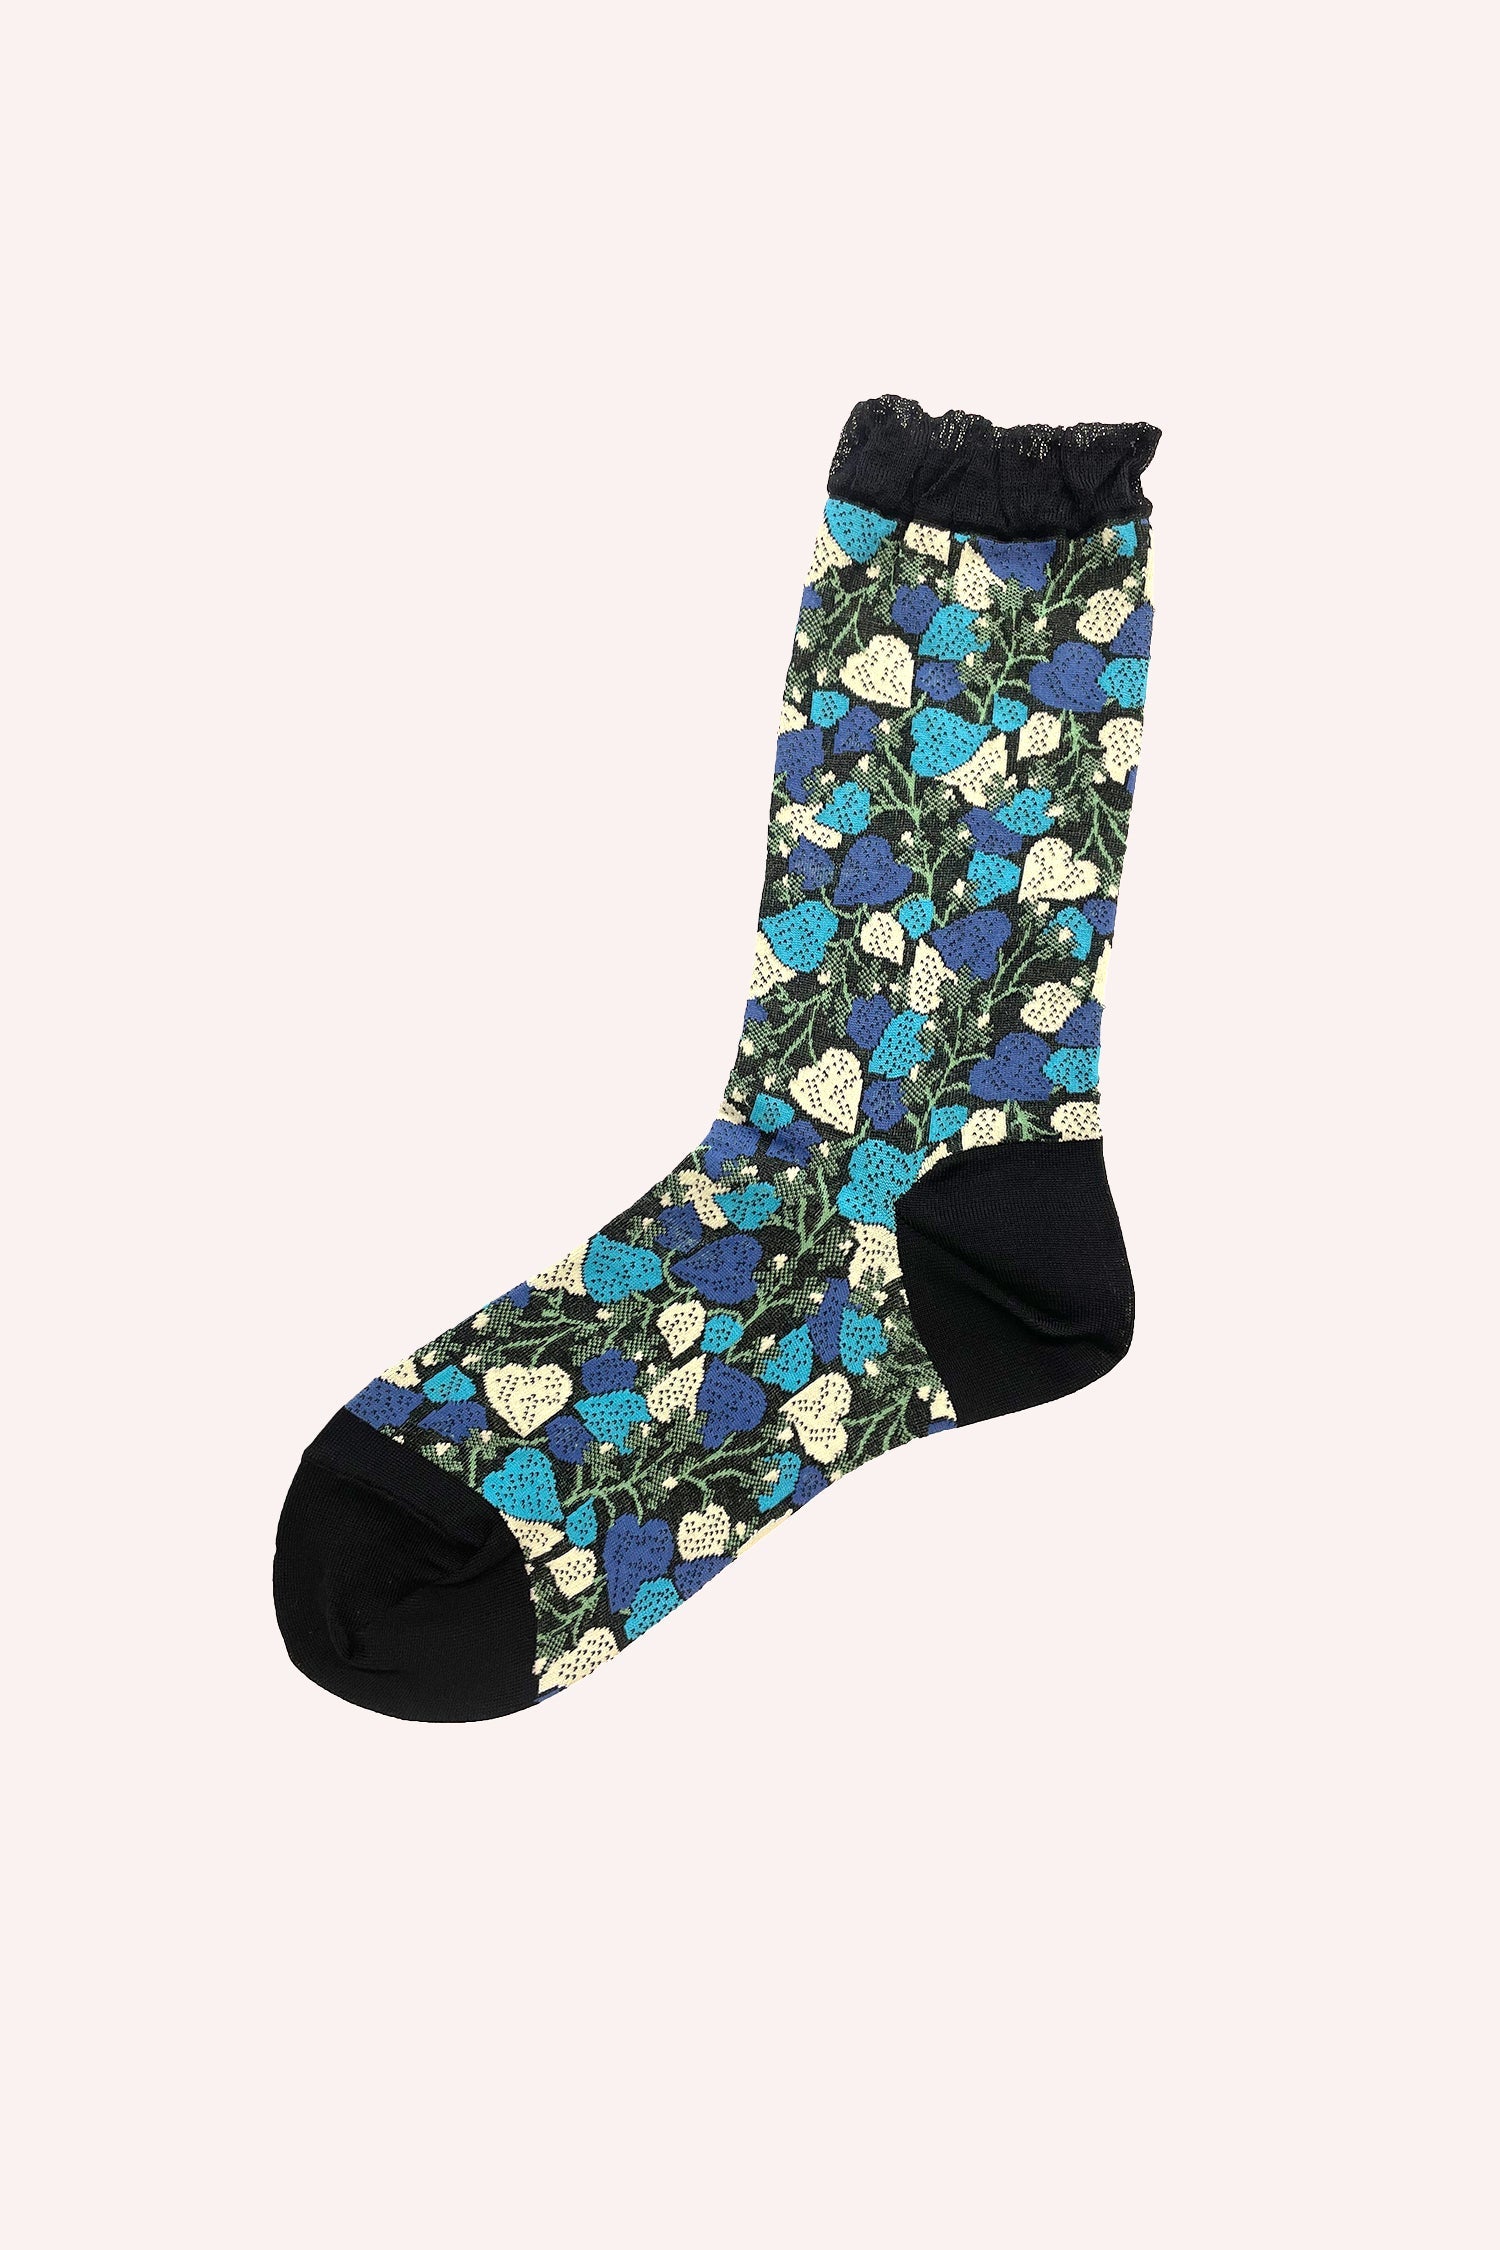 Blooming Hearts Socks Cornflower, toes, heel, in black, top with black lace, mid-calf long